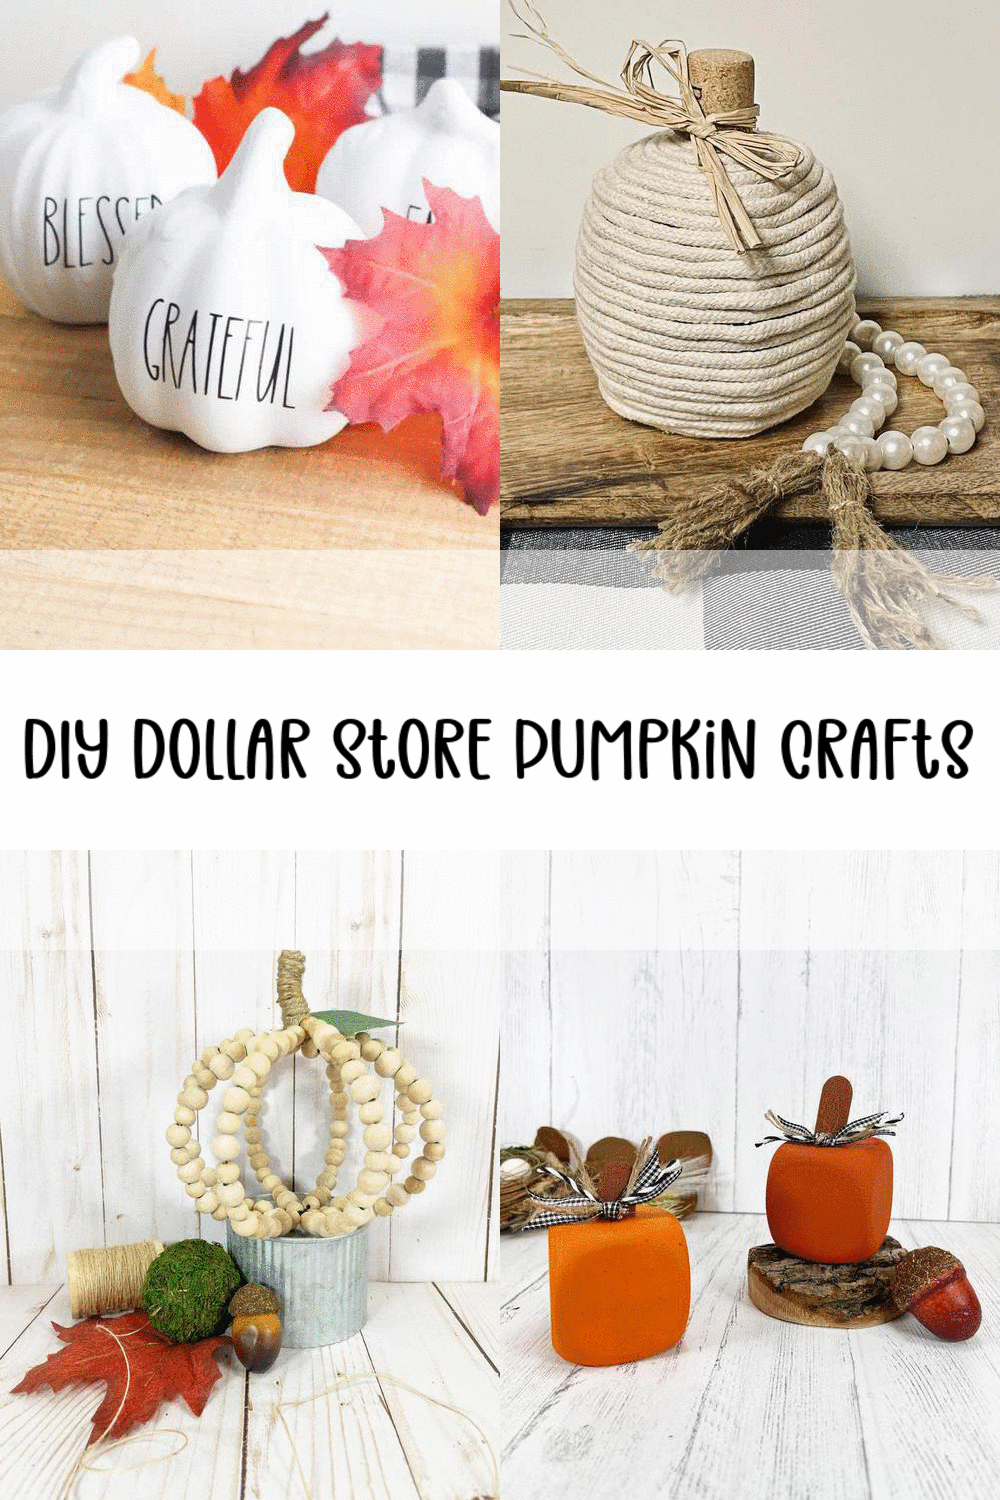 7 Dollar Tree Pumpkins Crafts - Best Dollar Store Pumpkins Ideas